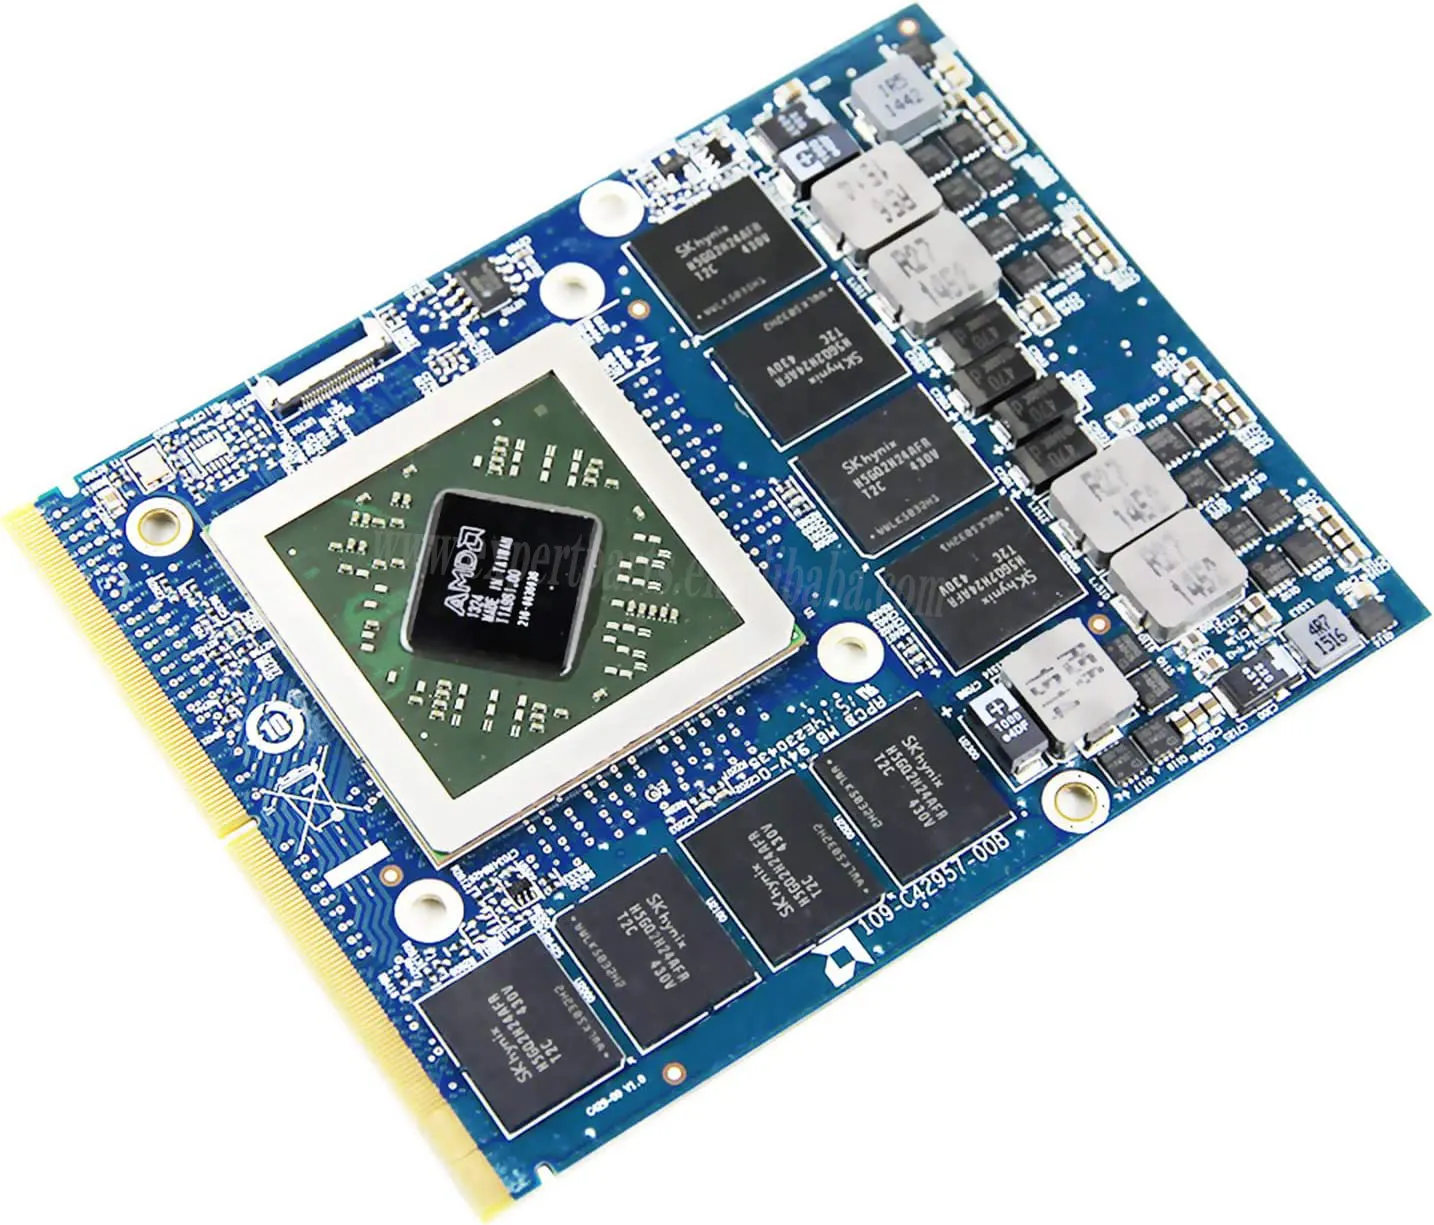 Original for AMD Radeon HD 7970M Crossfire Graphics Card, for Dell Alienware M17X R2 R4 R5 M15X R2 M18X R1 R2 R3 Gaming Laptop